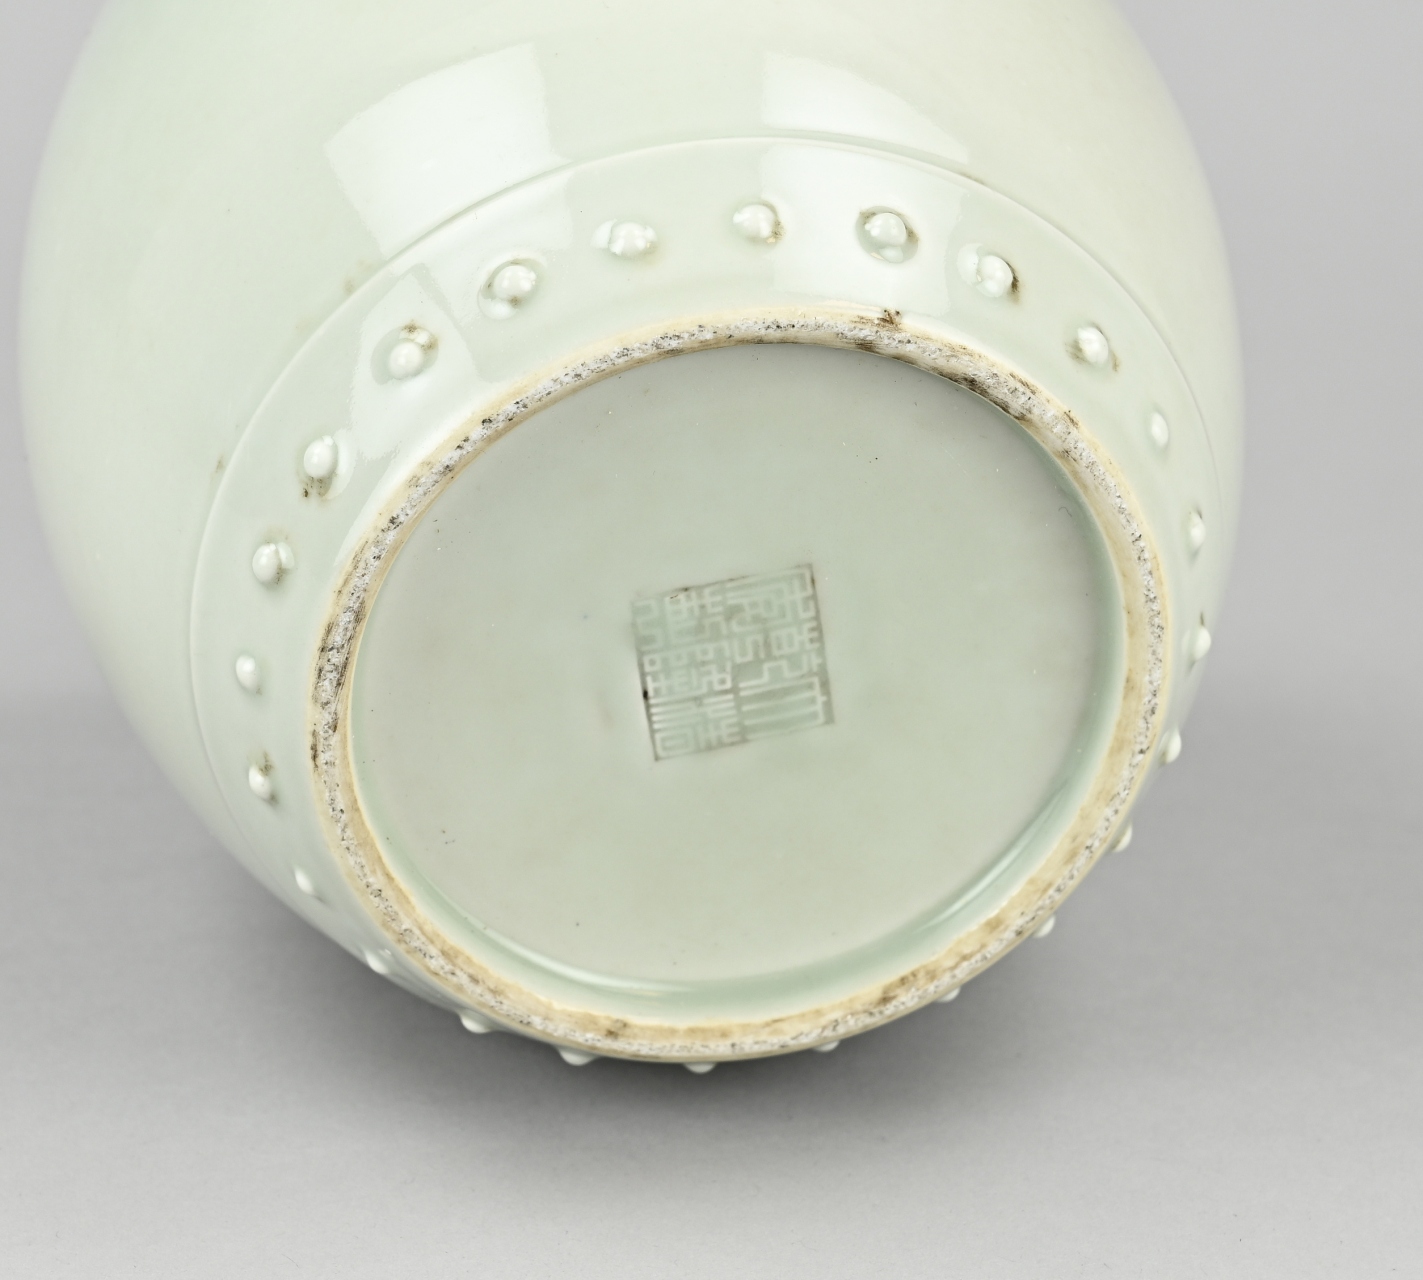 Chinese celadon vase Ã˜ 14.3 cm. - Image 2 of 2